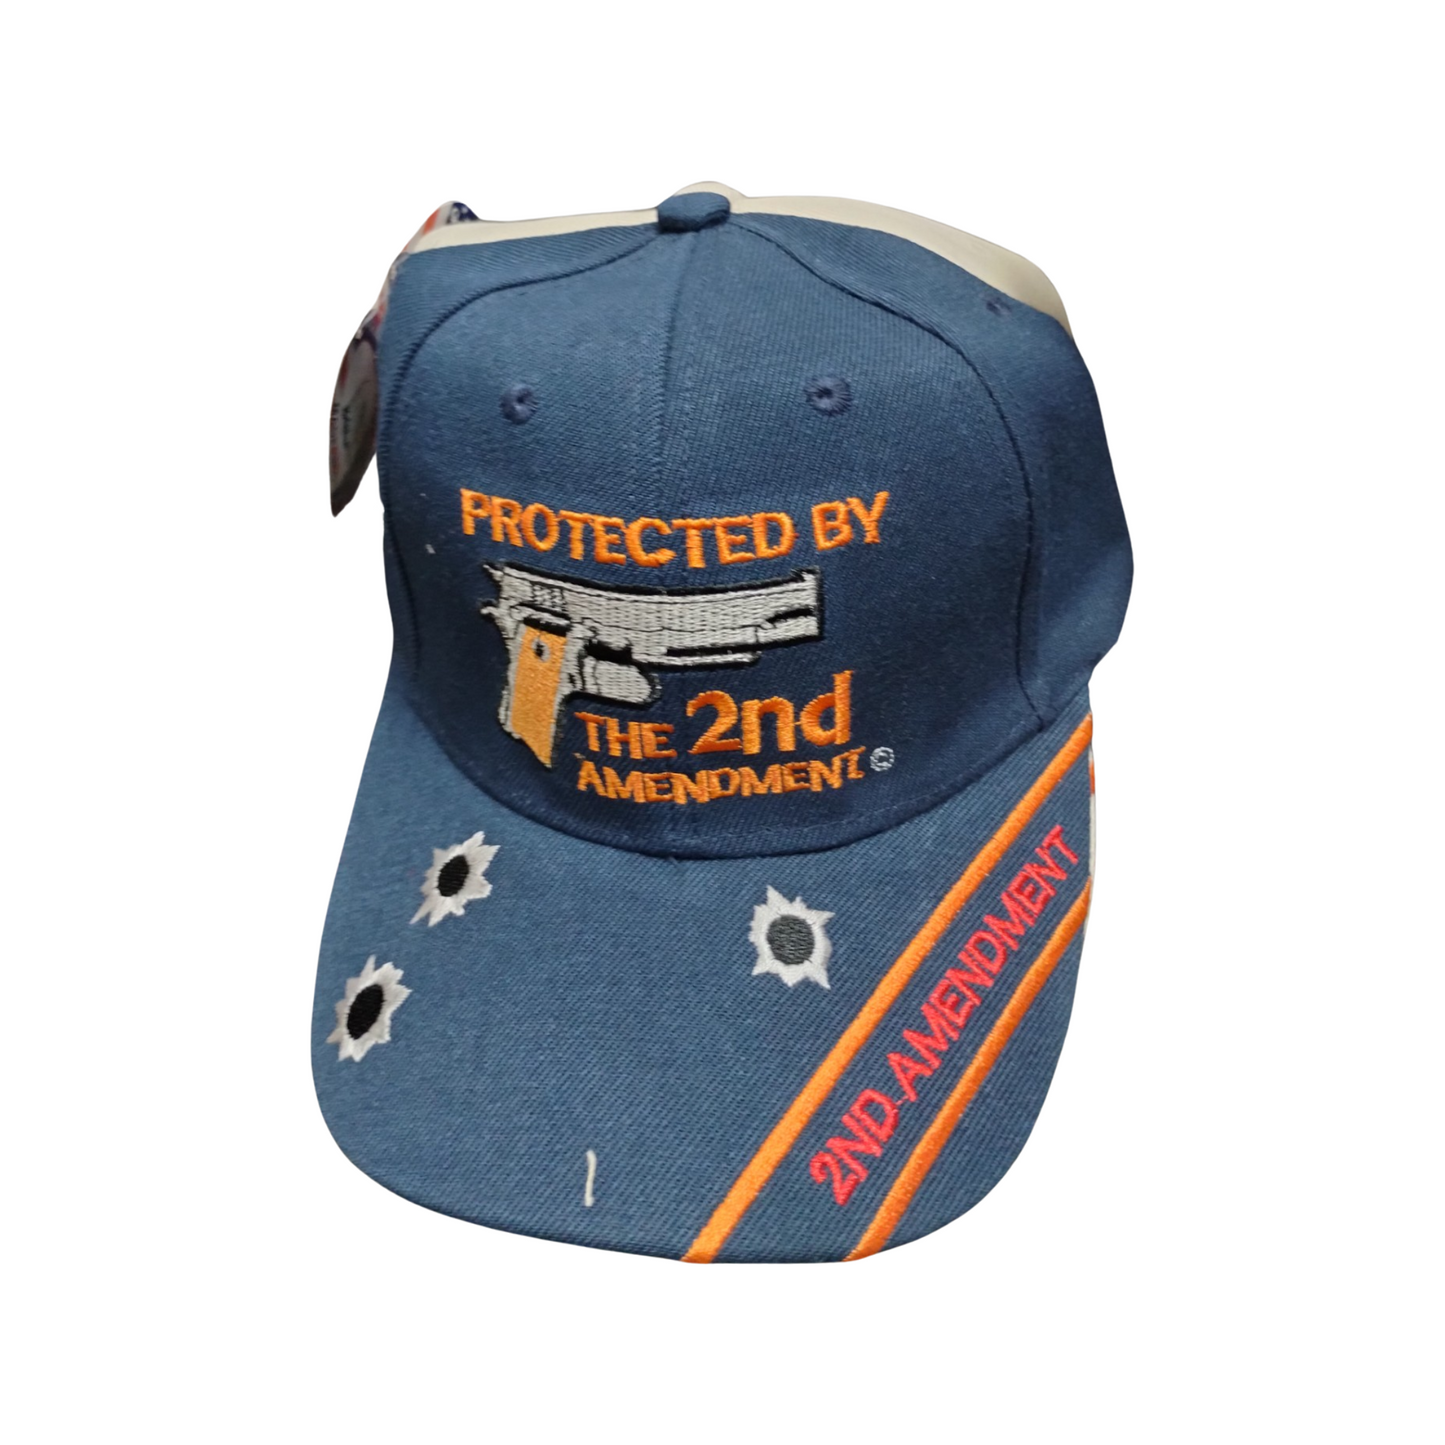 "Protected by Second Amendment Baseball Cap - Pro-Gun Rights Headwear"